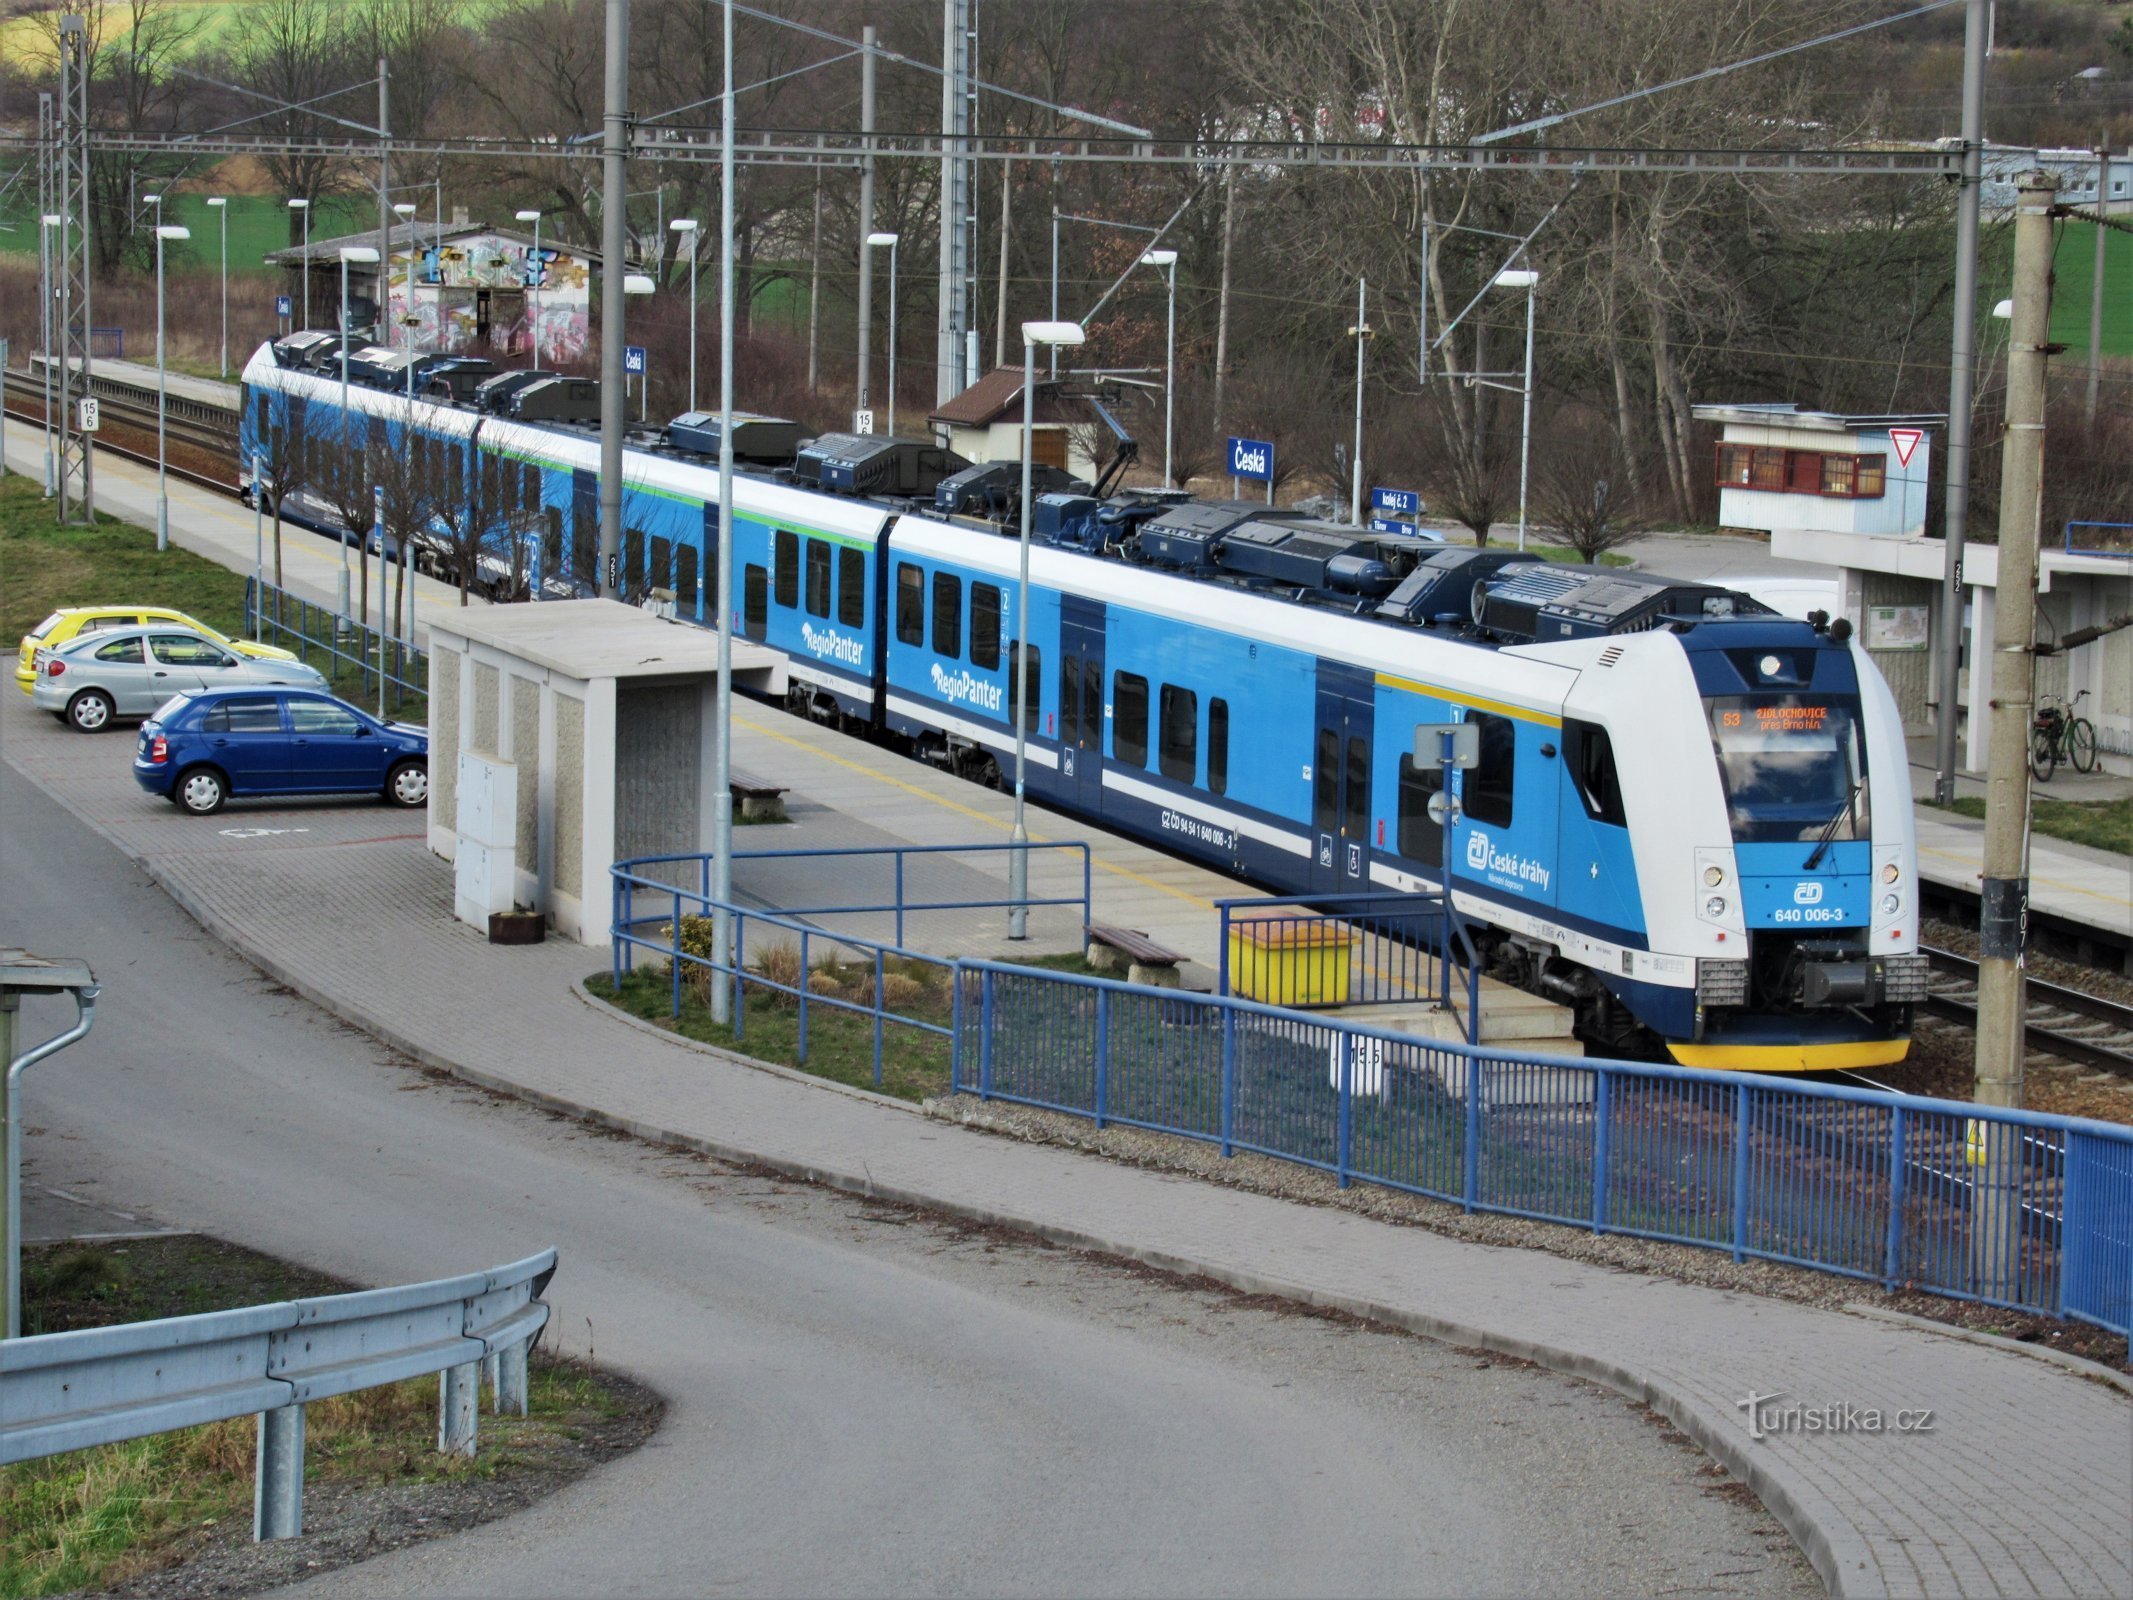 Platform richting Brno